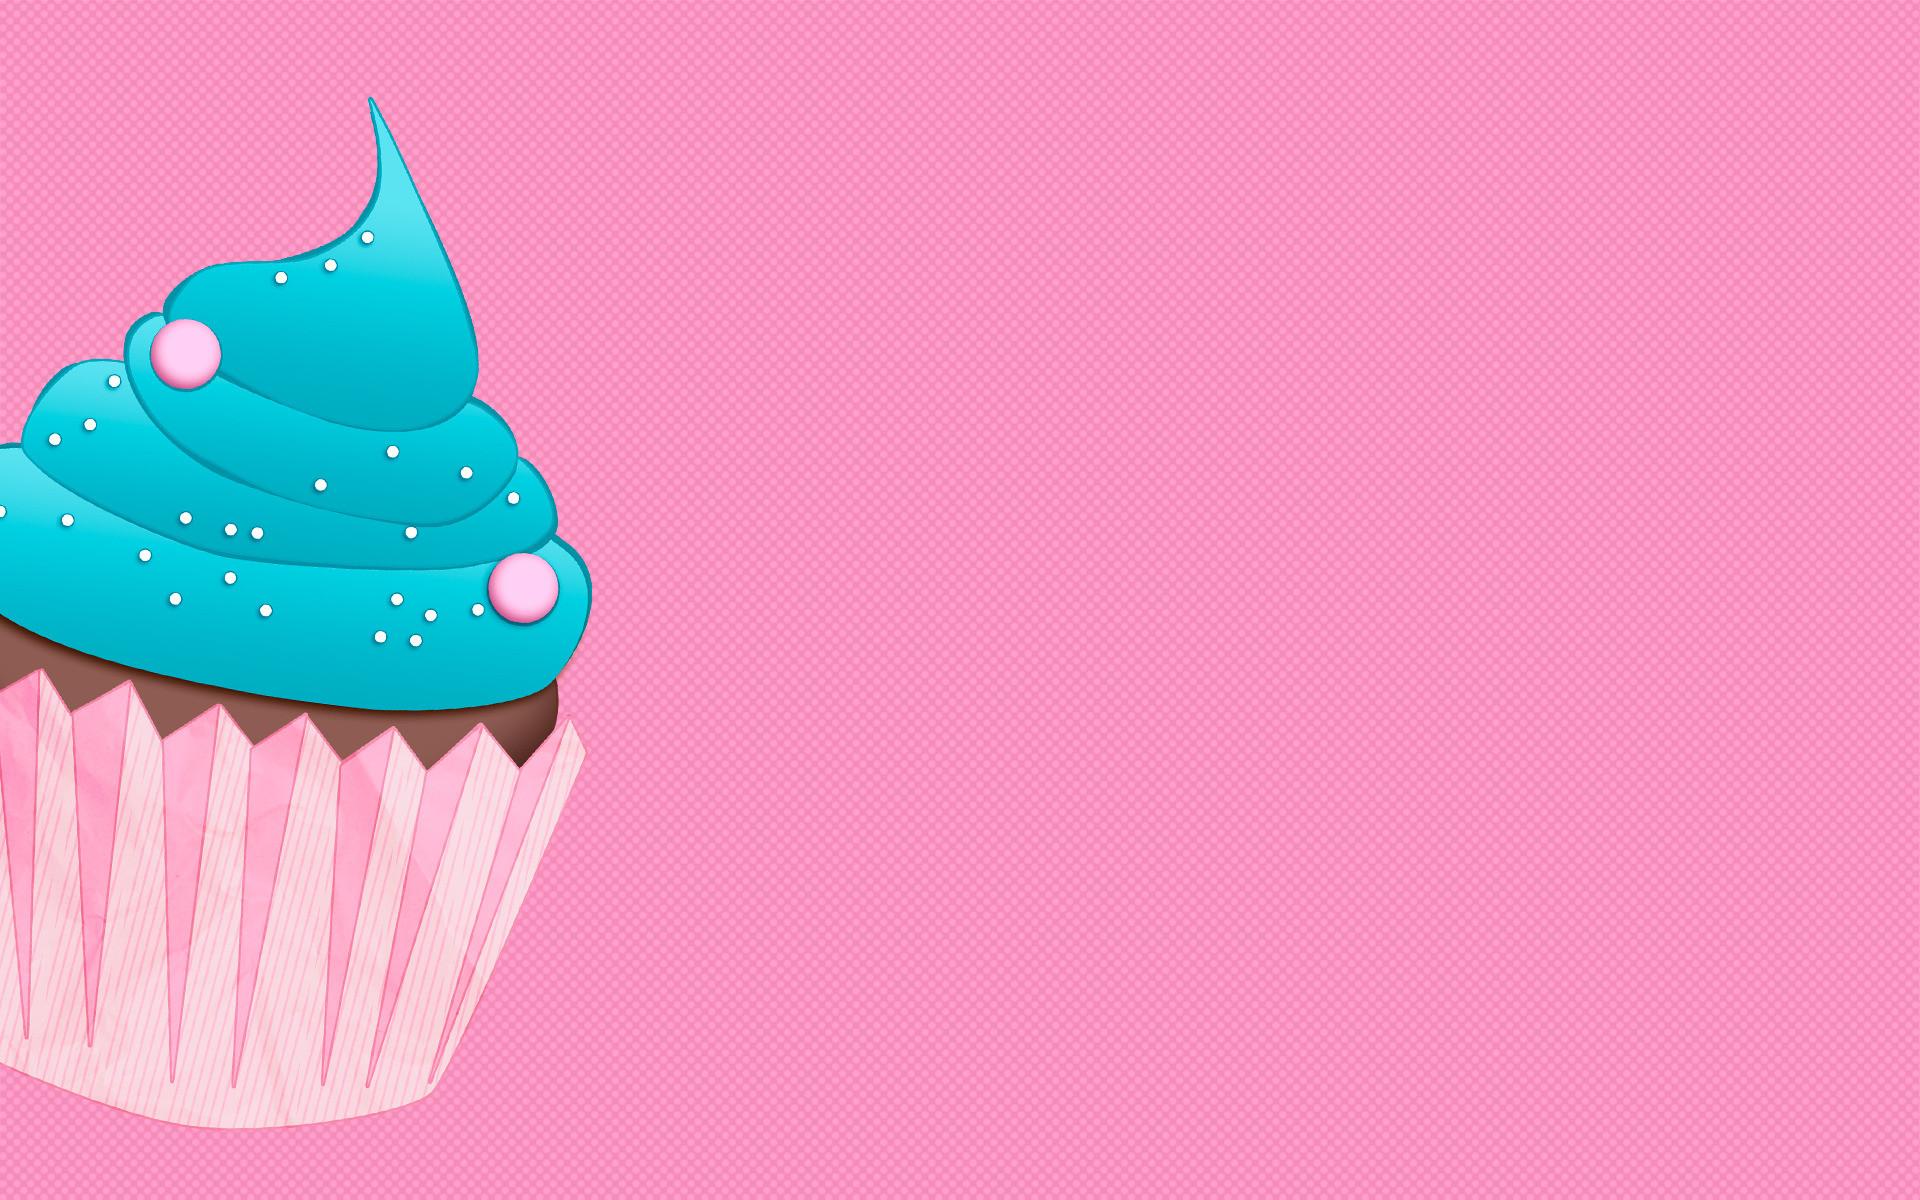 Cute Cupcake Wallpaper background picture